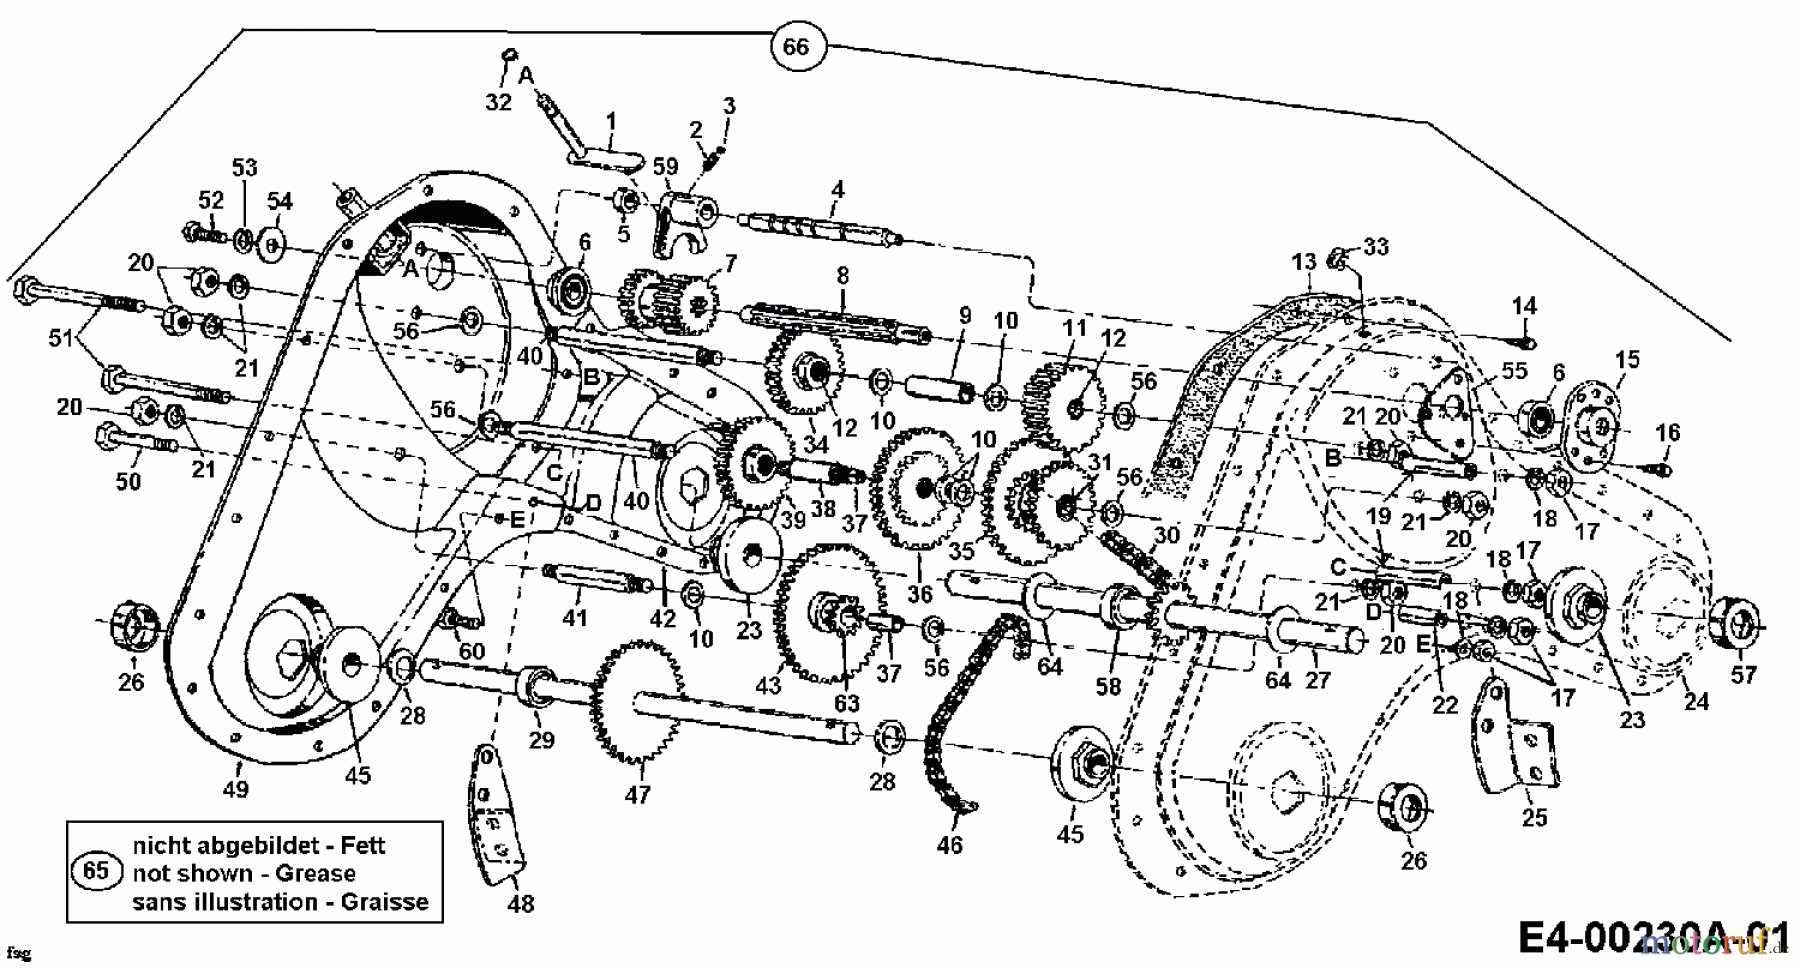  White Motorhacken RB 550 21A-454B680  (2000) Getriebe